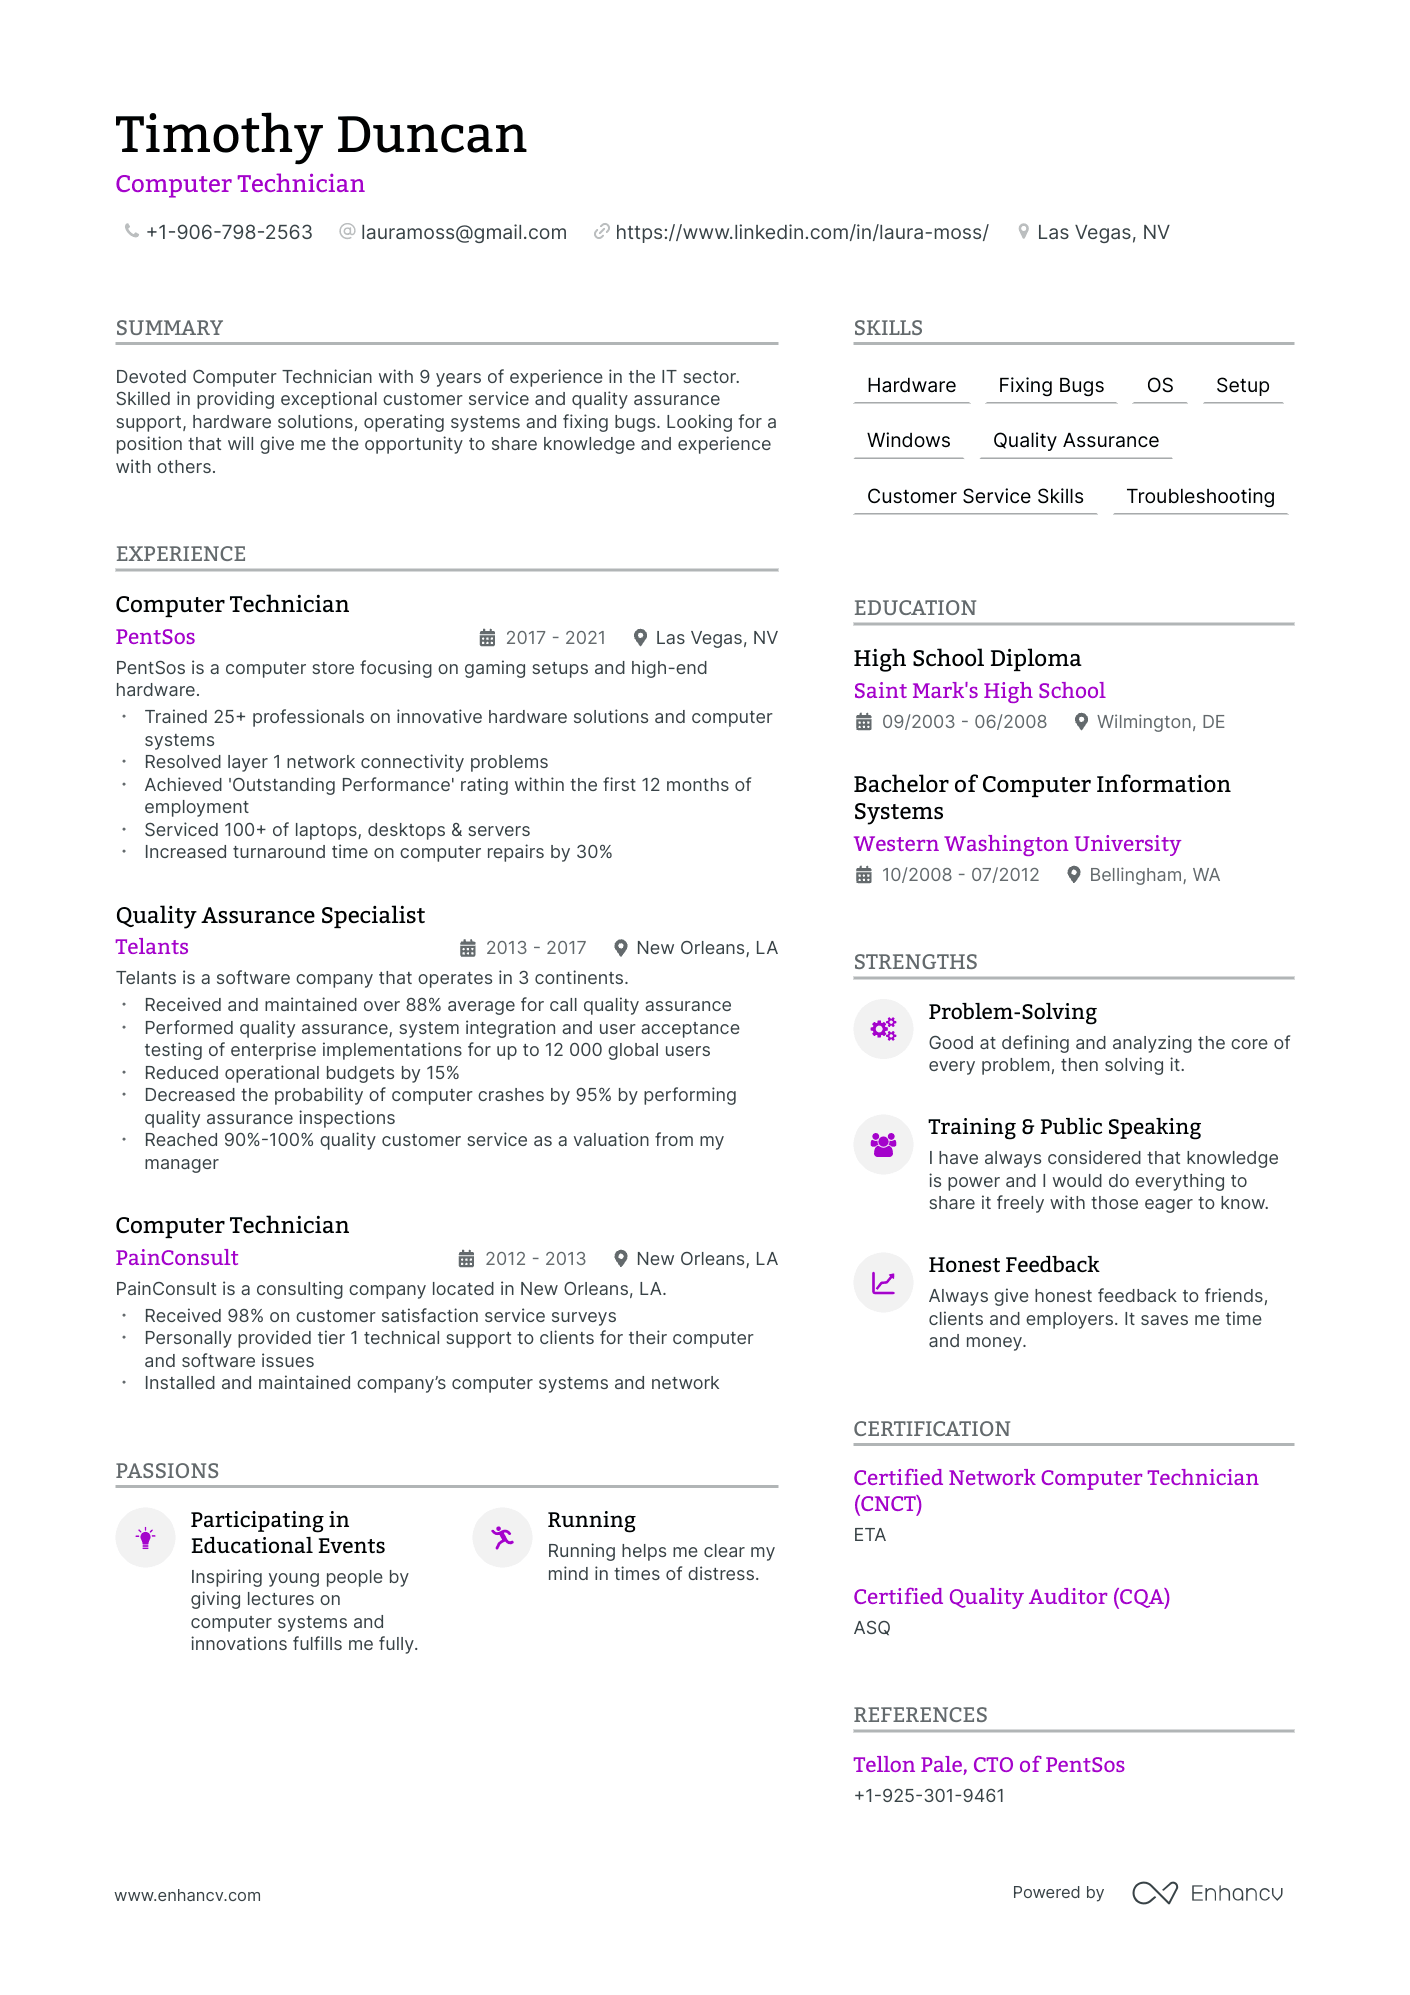 Computer Technician resume example